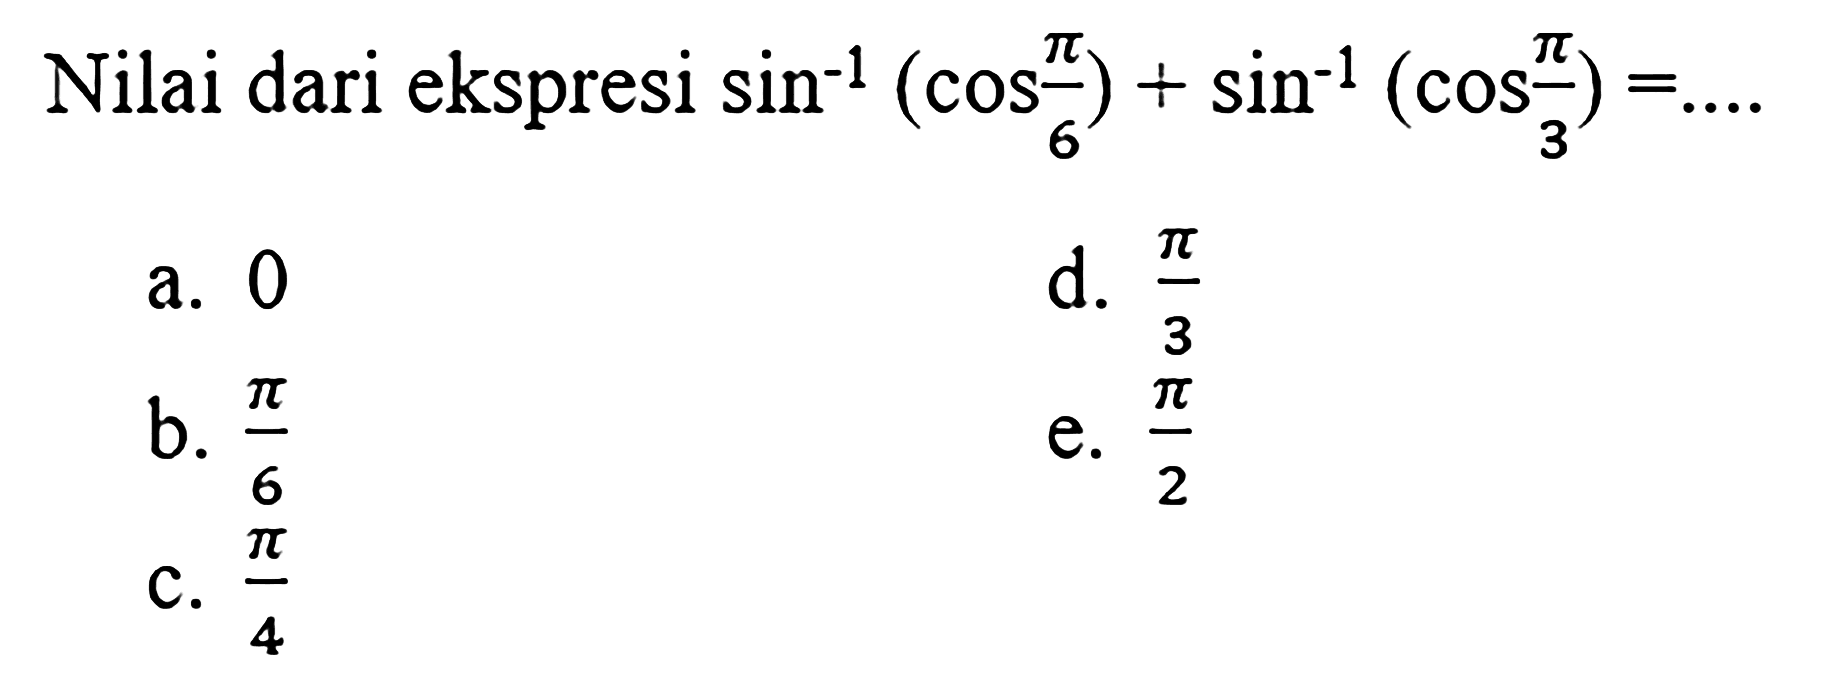 Nilai dari ekspresi sin^-1 (cos pi/6)+sin^-1 (cos pi/3)=...